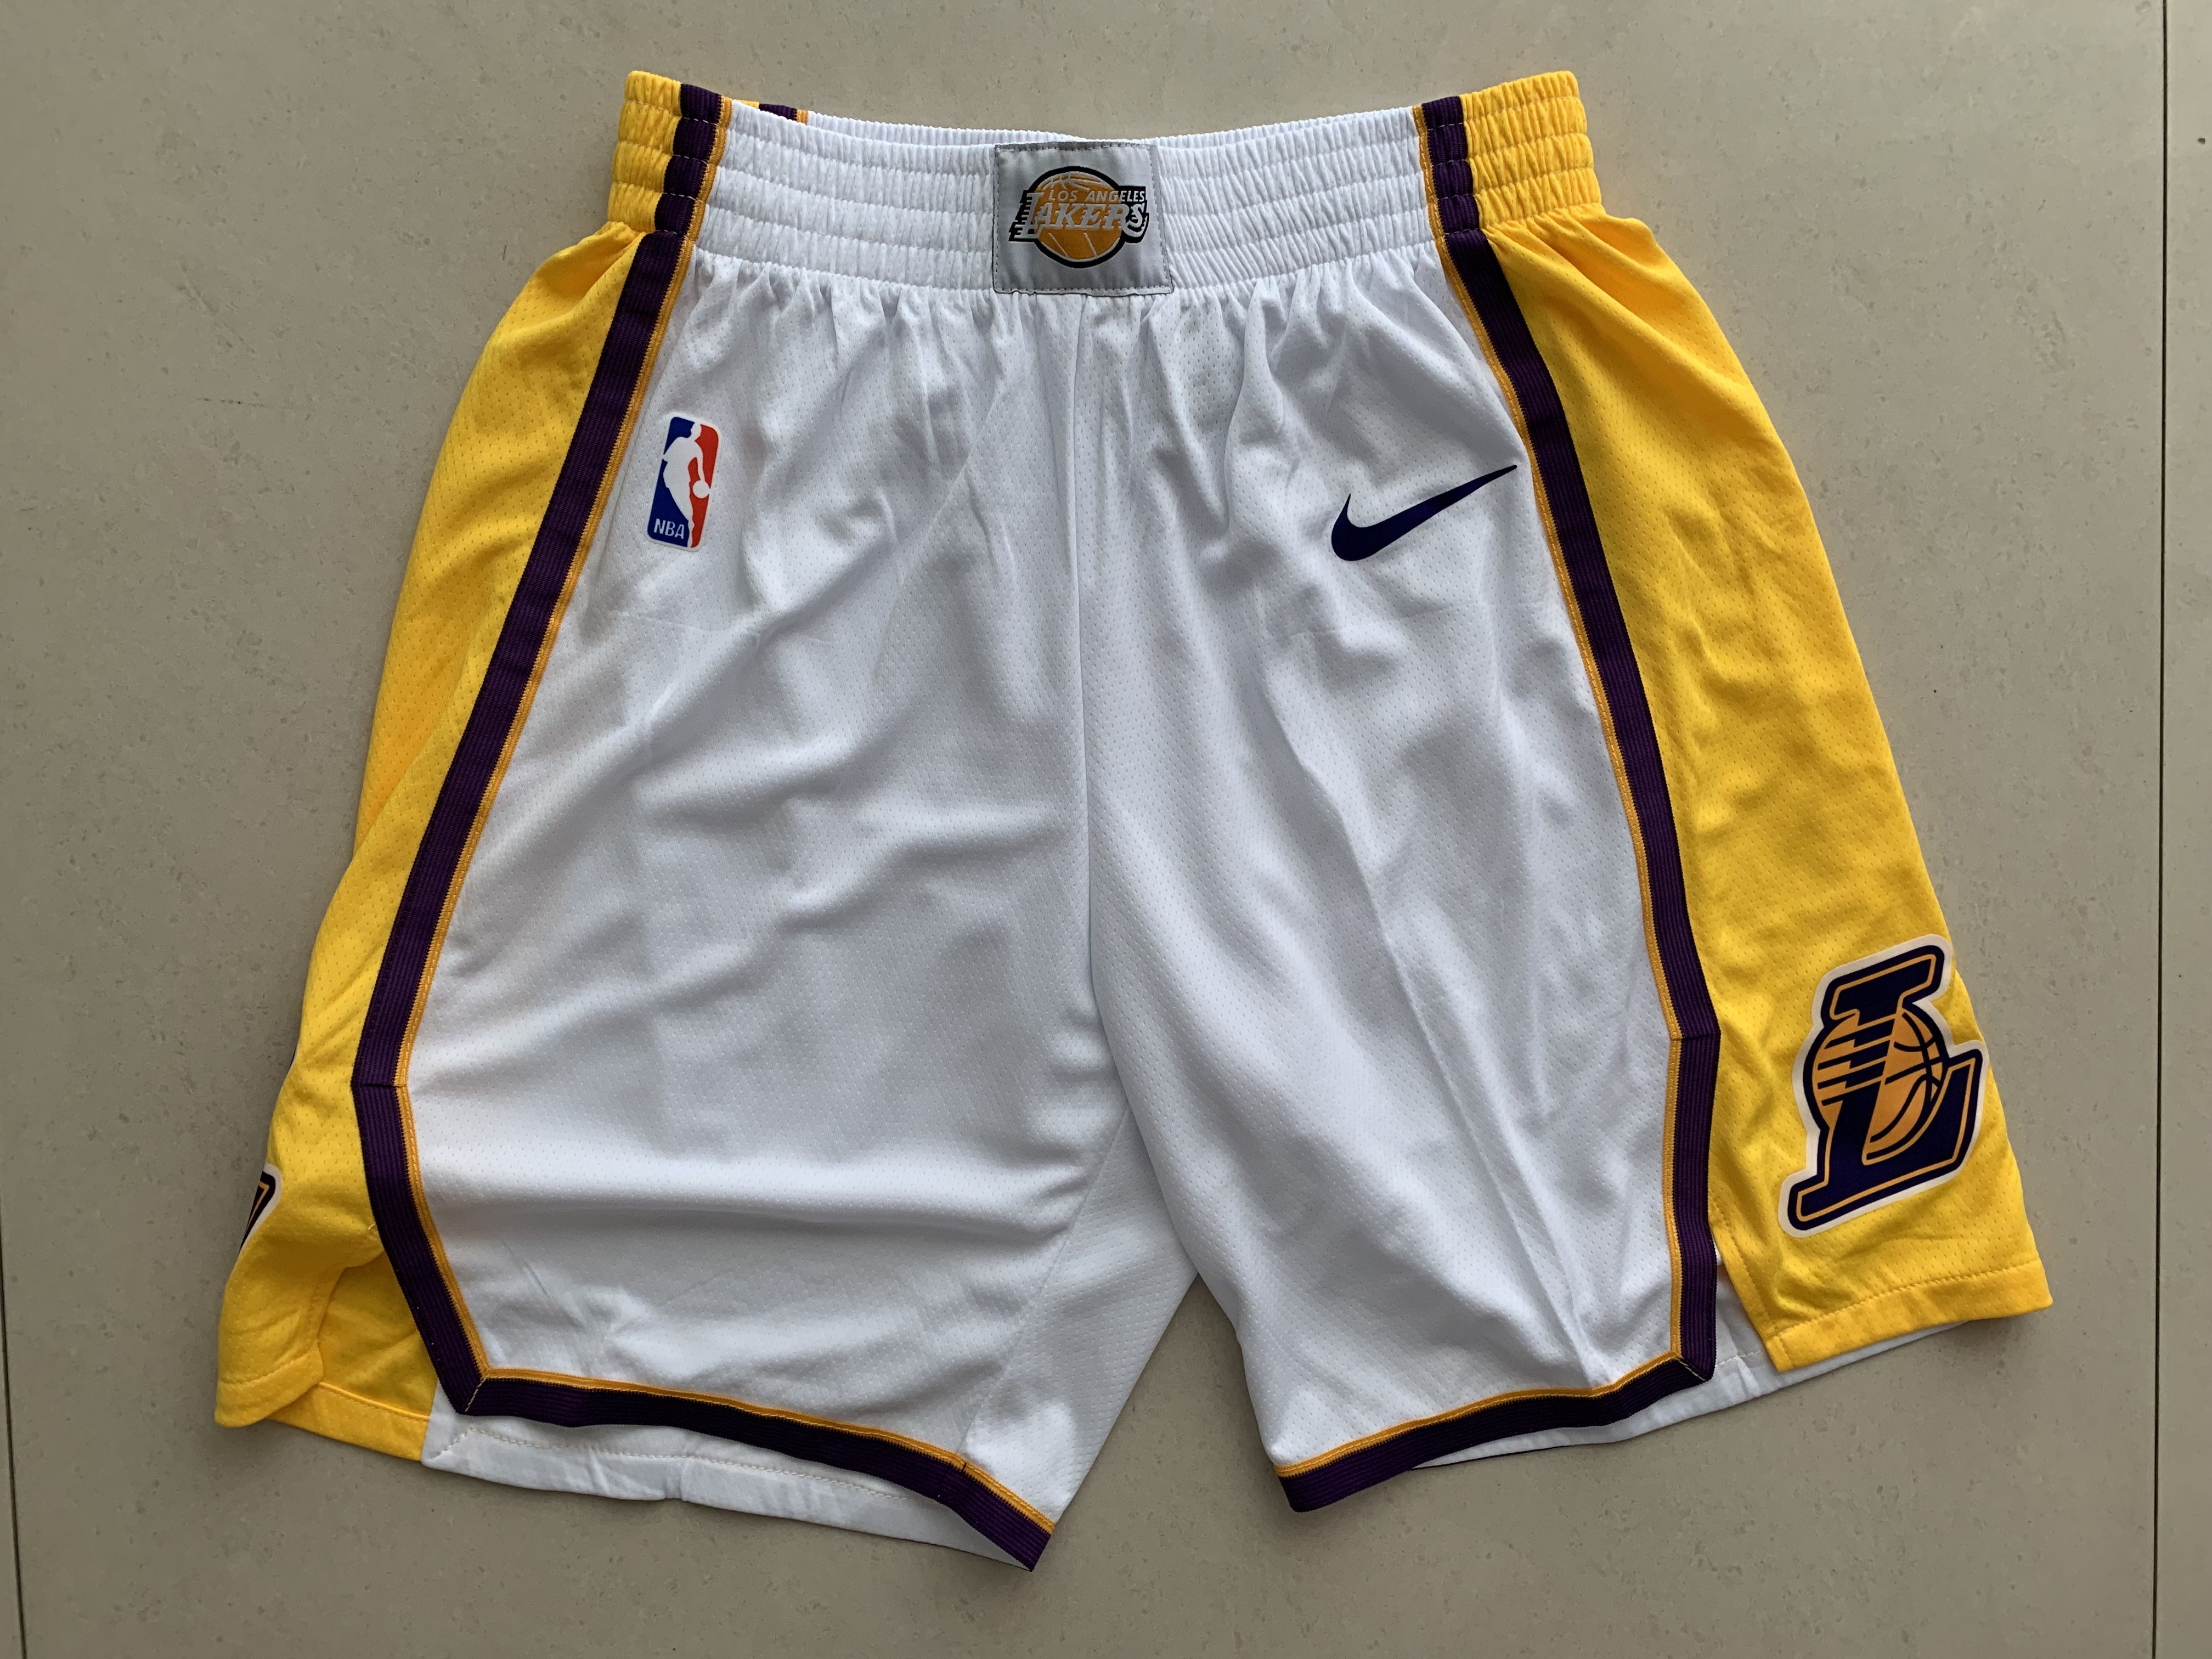 New Original Heat Pressed NBA Mens White Yellow White Blue Purple Black  Stripe Los Angeles Lakers City Edition Shorts Basketball Short